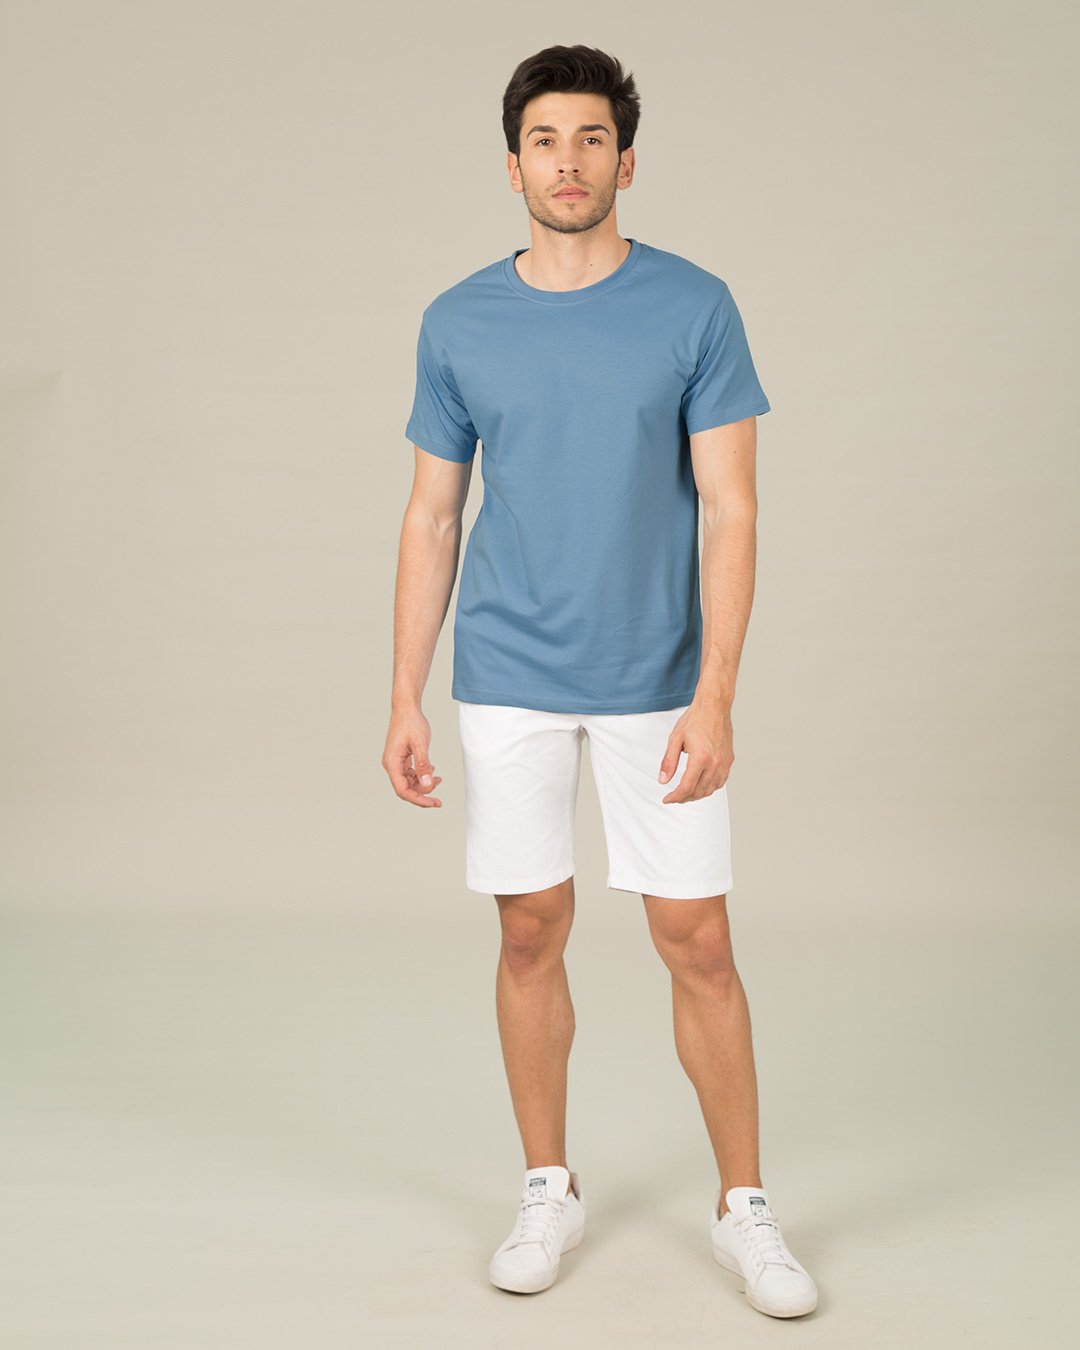 island-blue-half-sleeve-t-shirt-men-s-plain-t-shirts-209191-1560418321 for him Island Blue